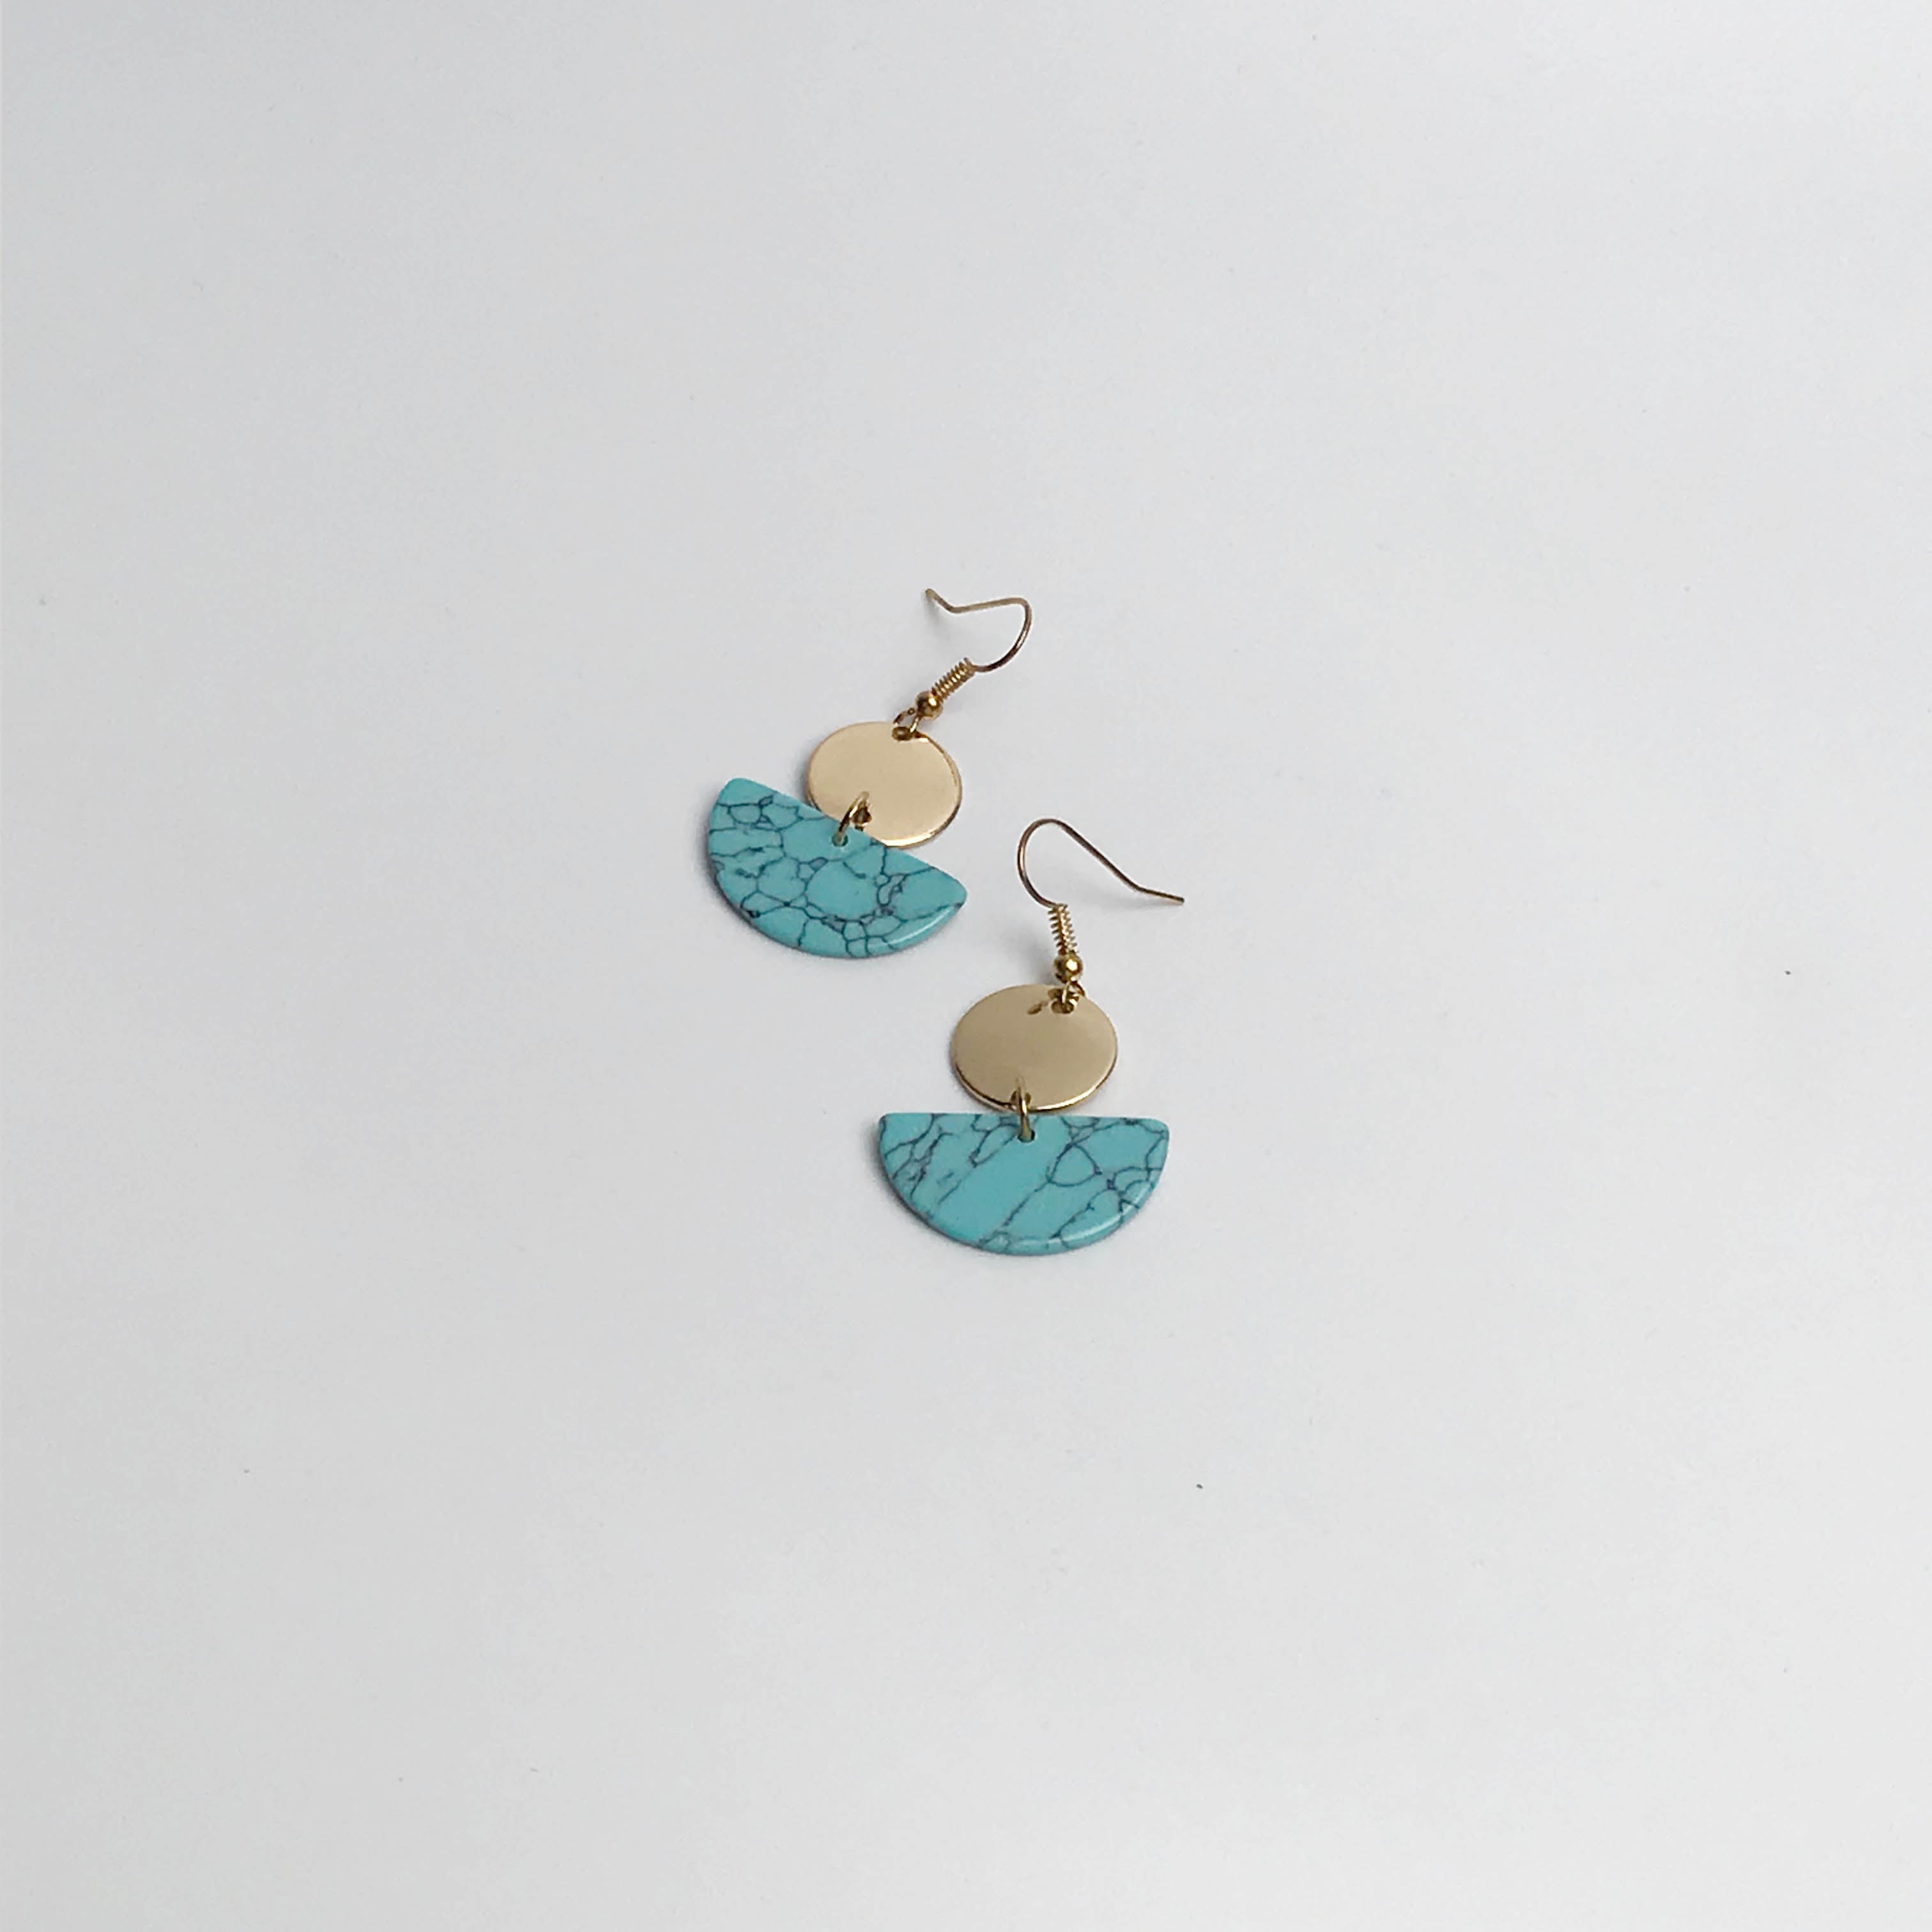 Anne Bridesmaid Marble Print Earrings in Turquoise